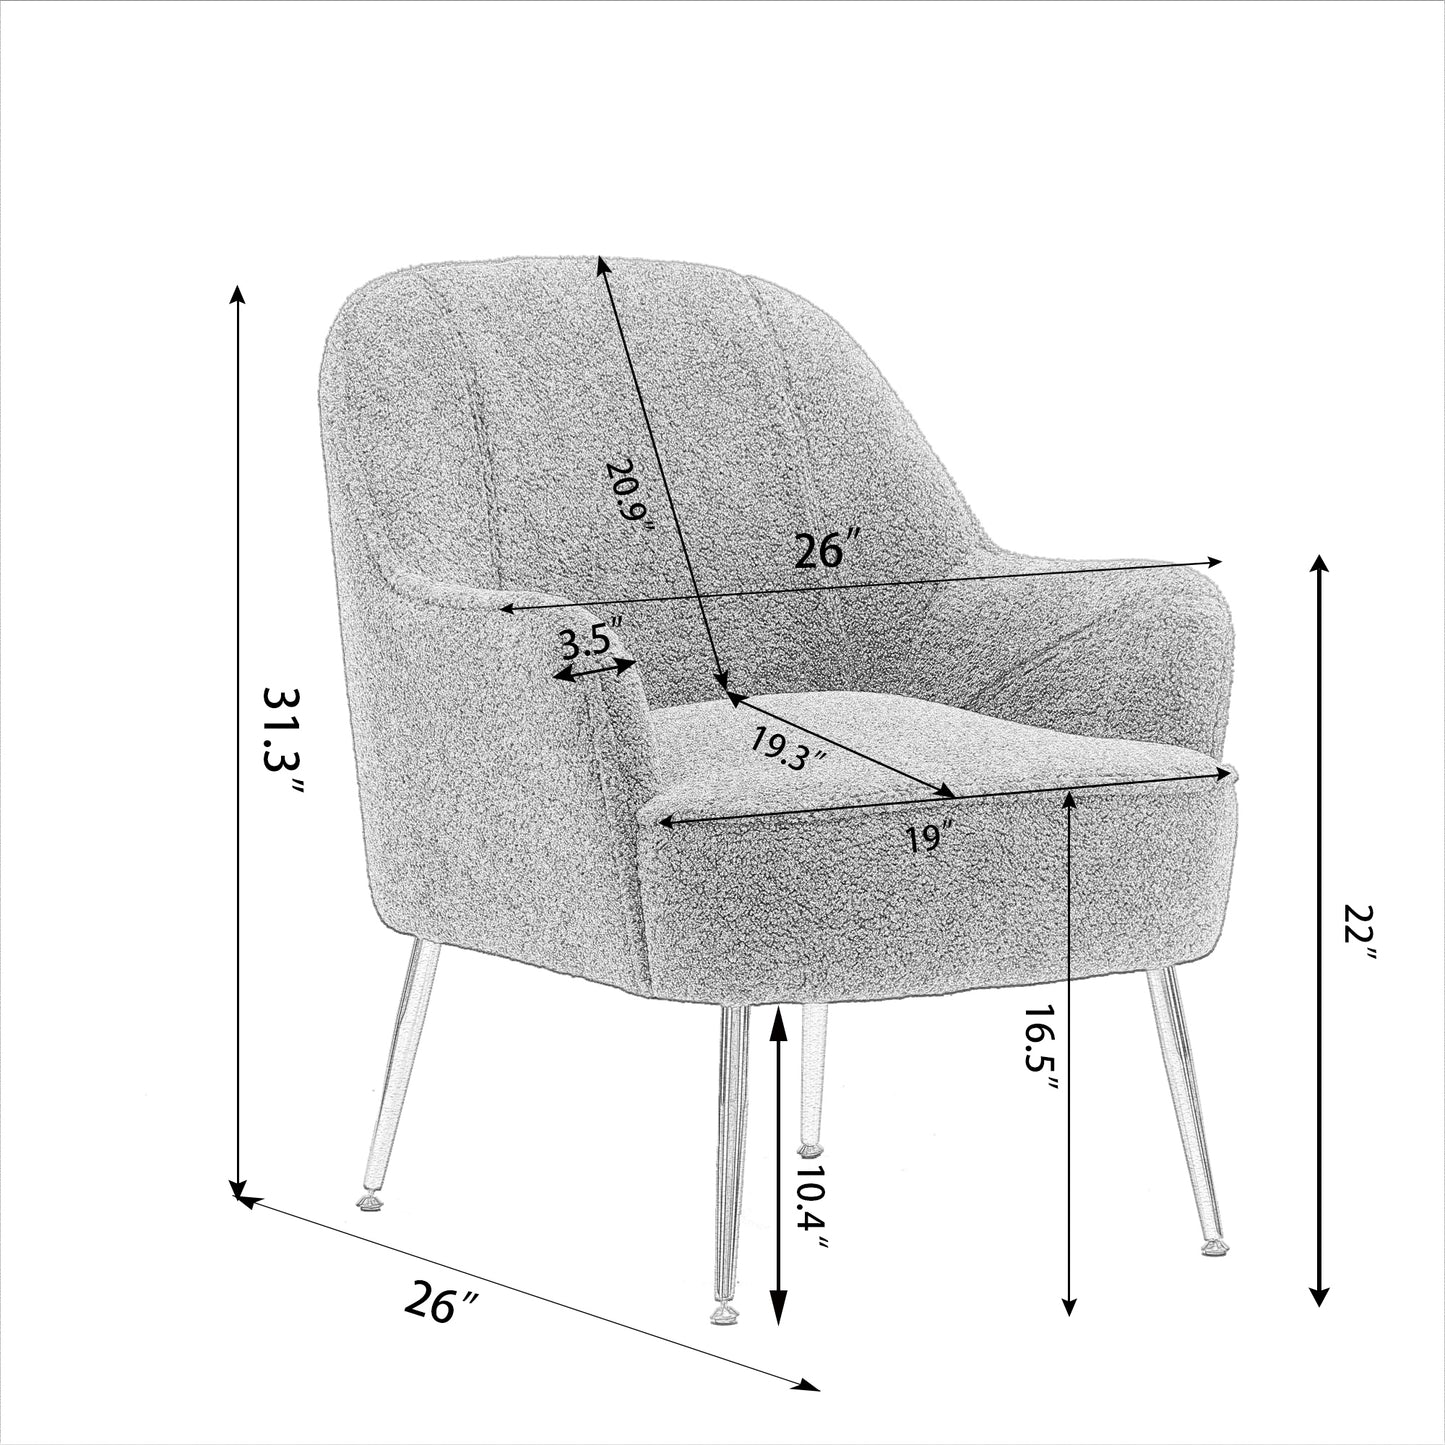 Modern Ergonomics Soft Velvet Fabric Accent Chair With Gold Legs And Adjustable Feet - Cream